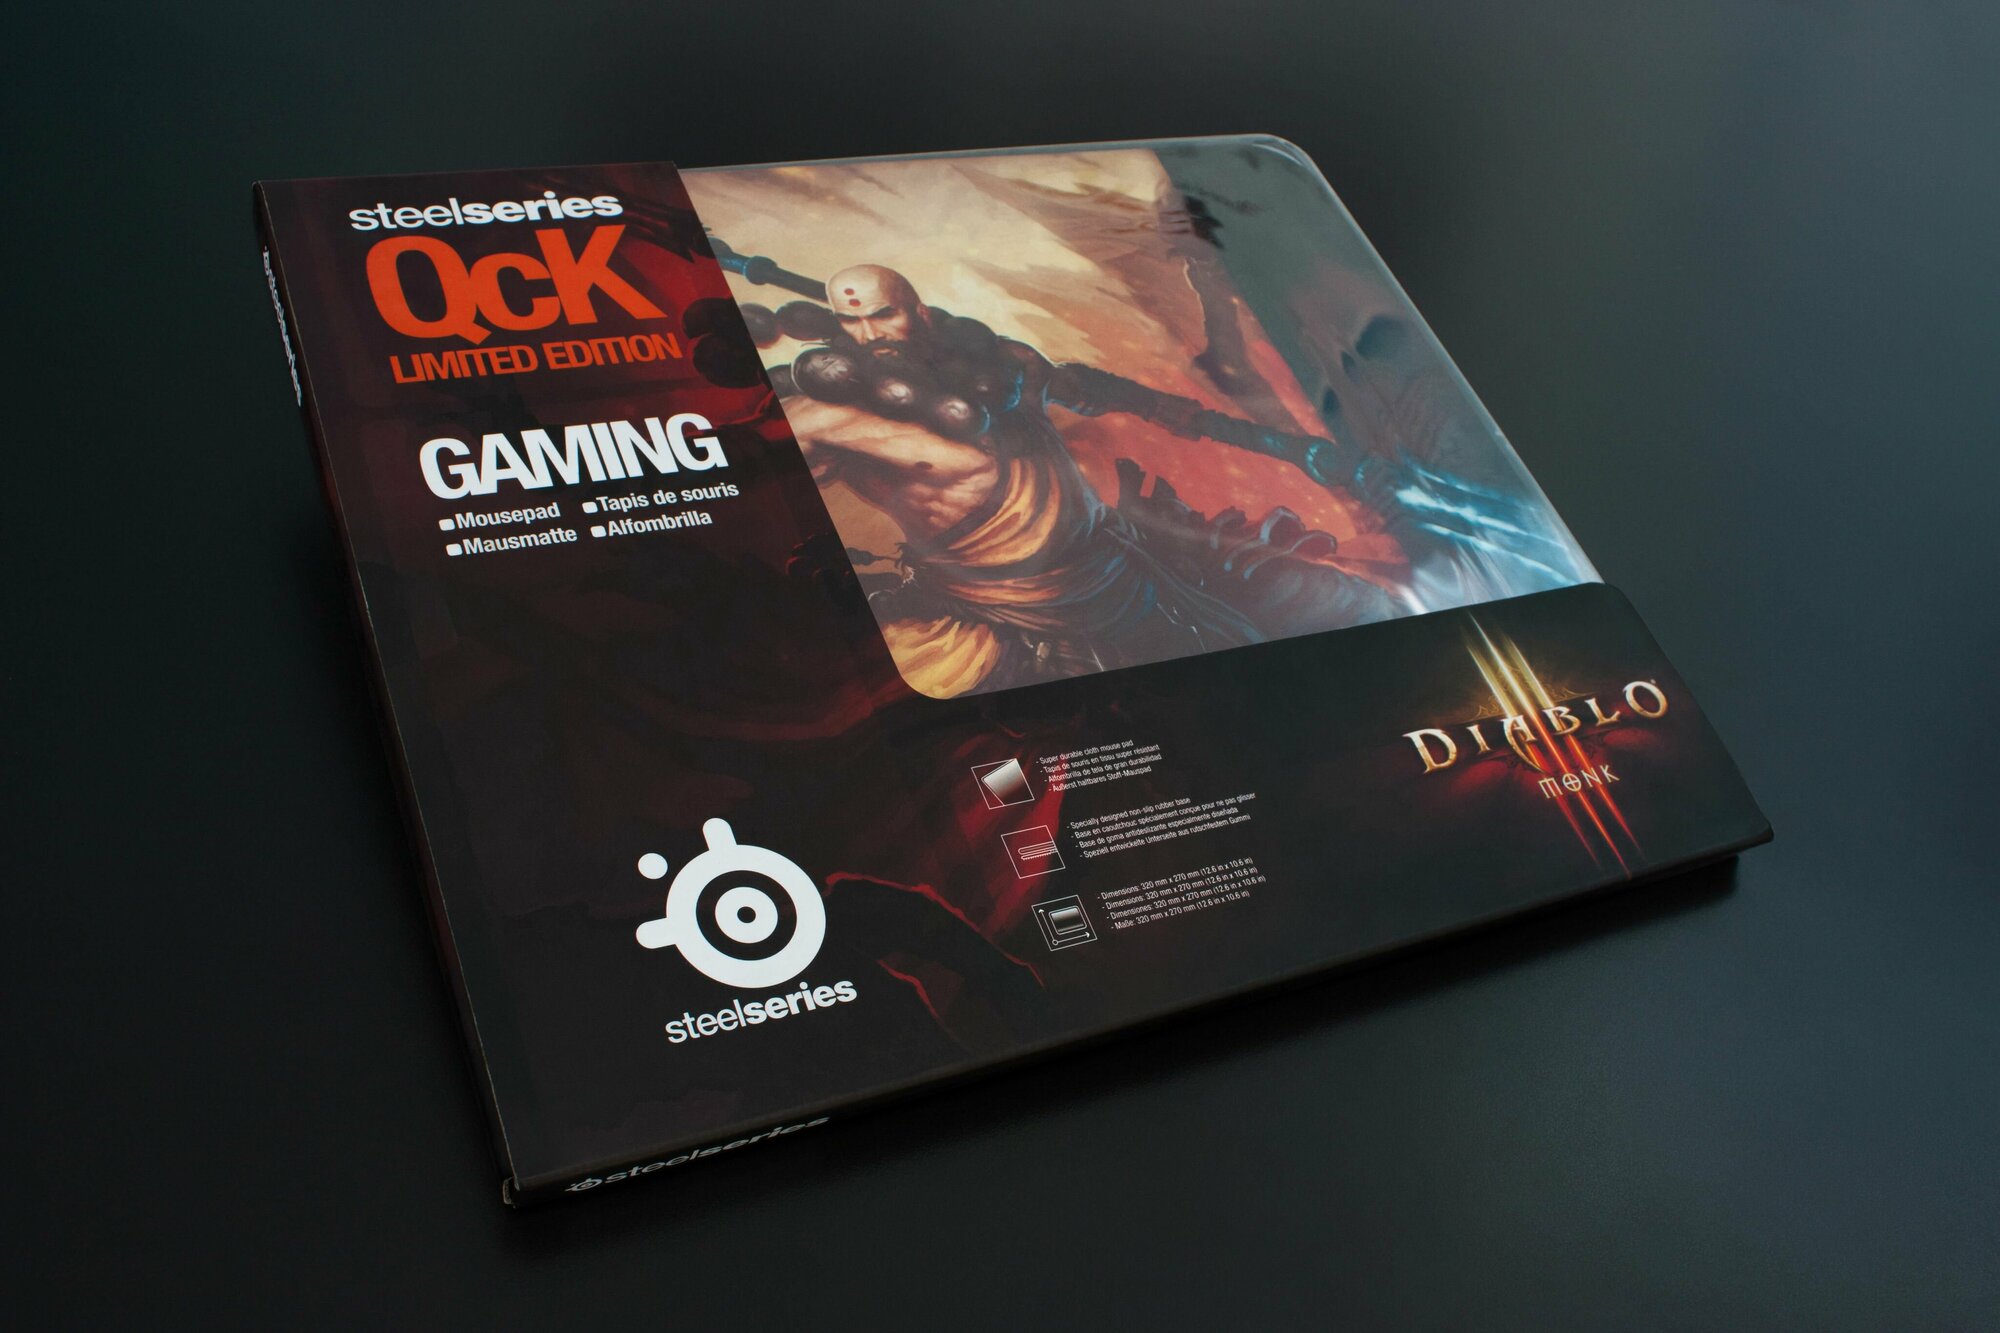 SteelSeries QcK Diablo III Monk Edition